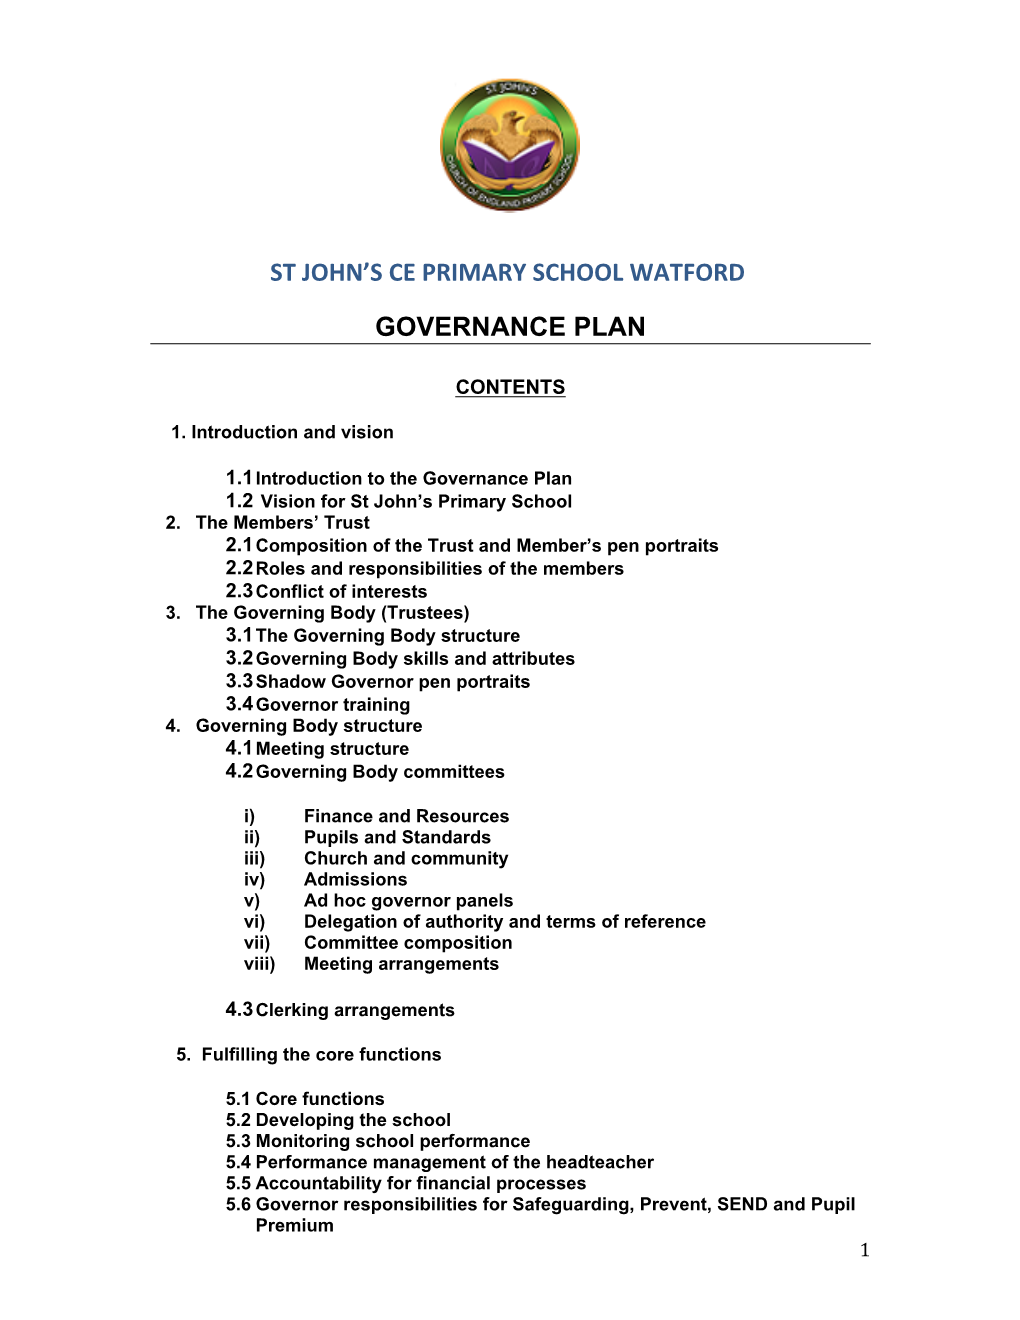 Governance Plan